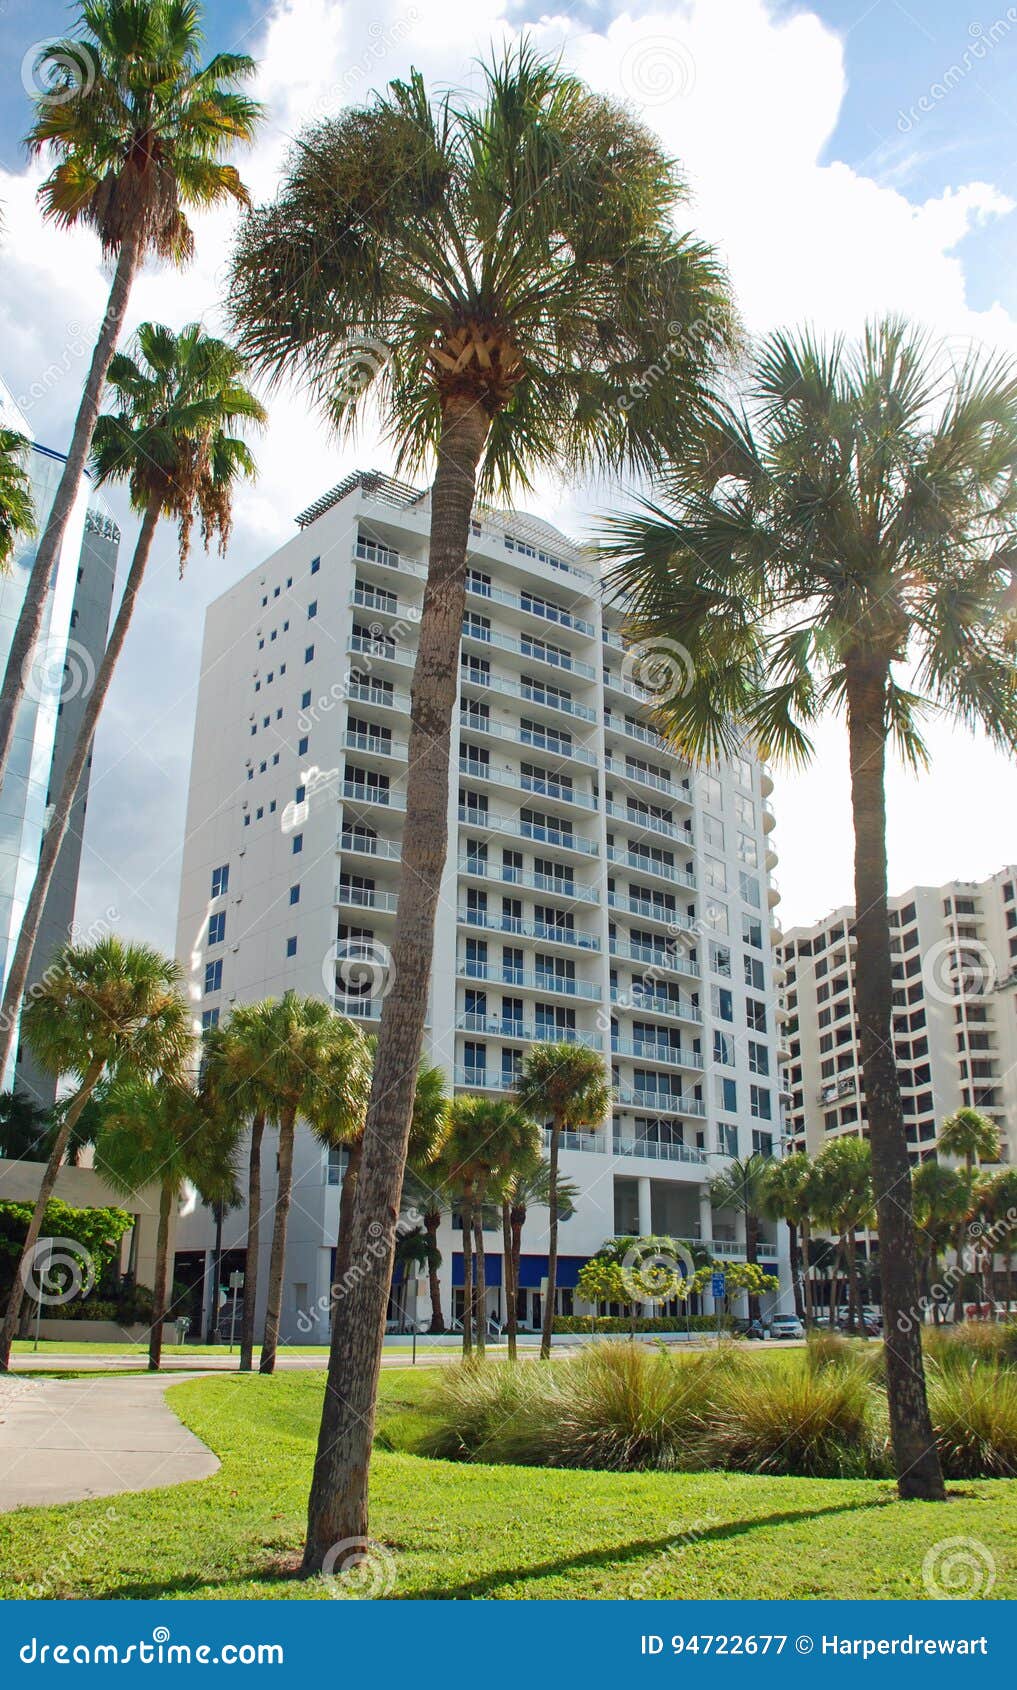  Luxury  Condo  Tower Sarasota  Florida  Stock Image Image of 